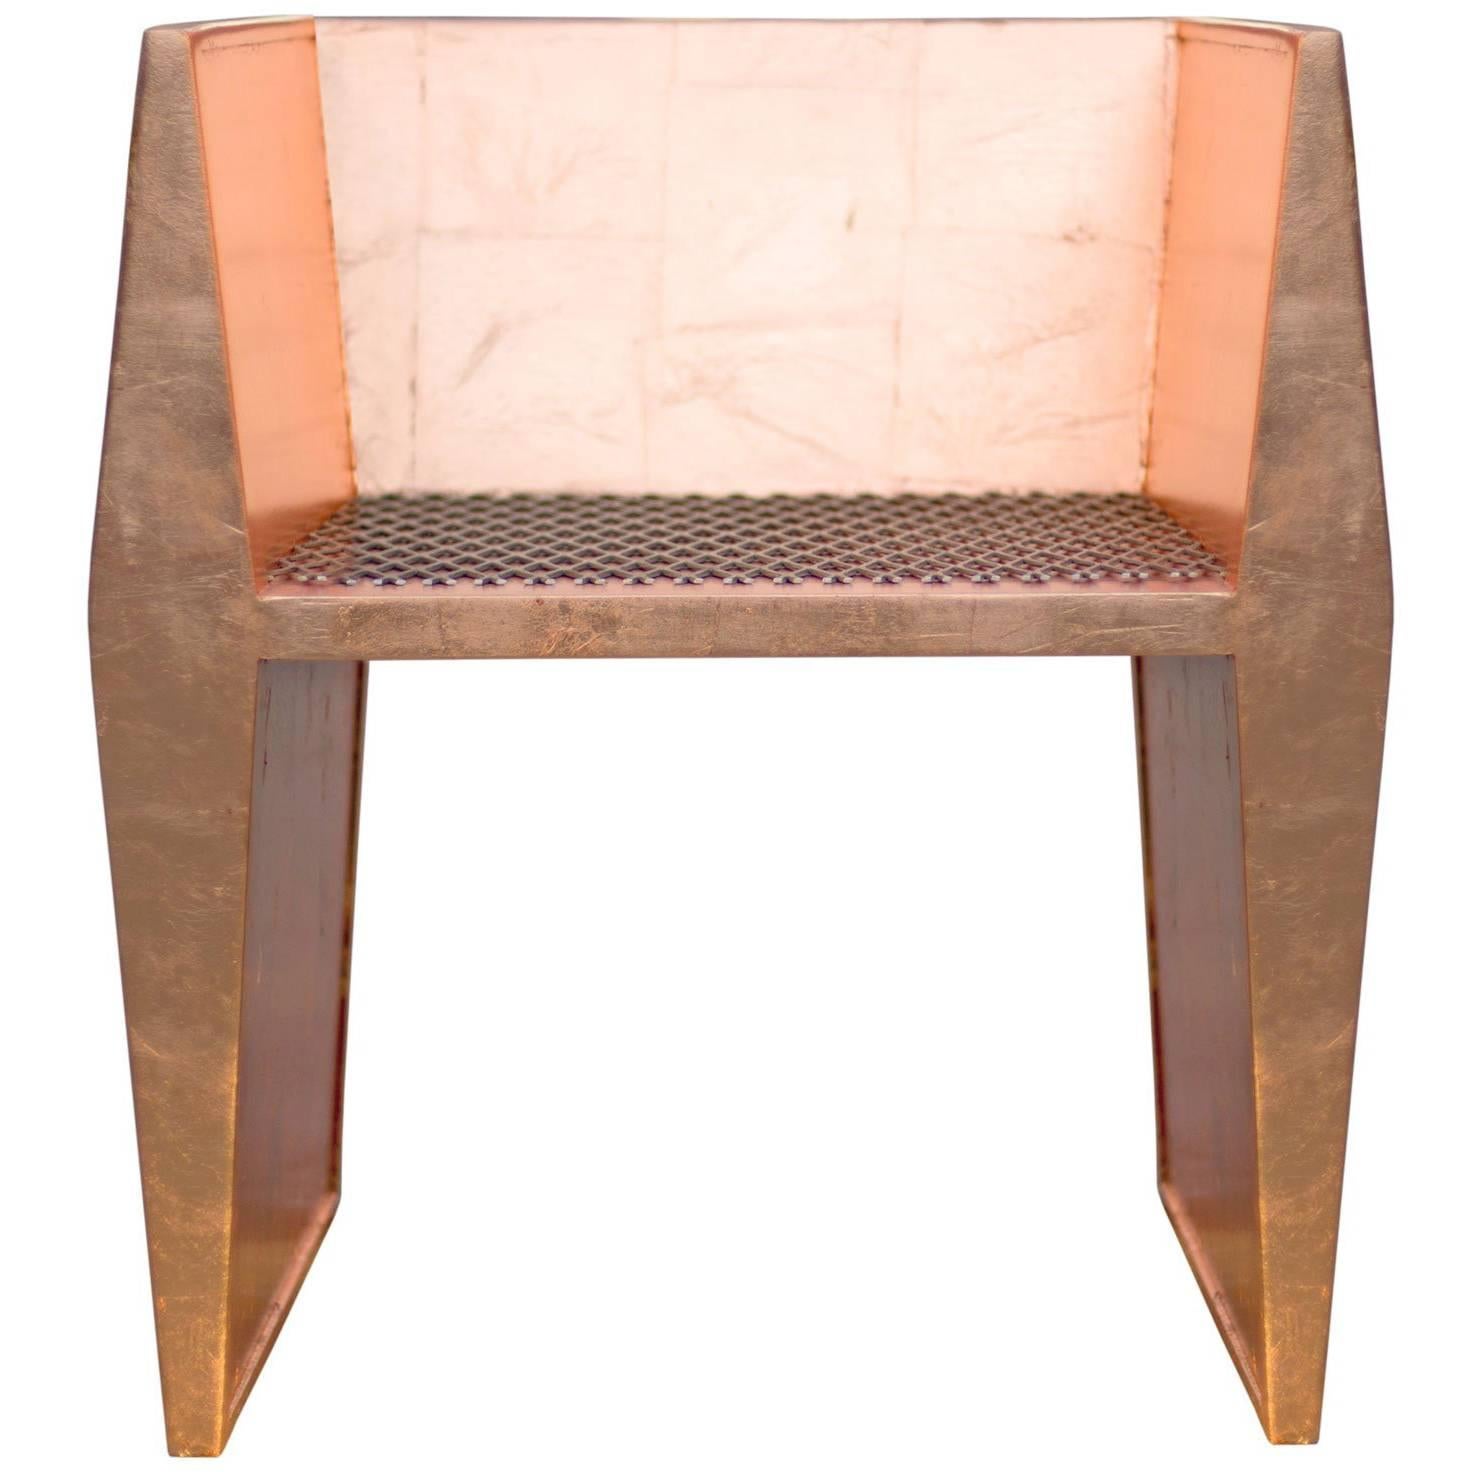 Sentient Sapience Chair Copper Leaf Finish For Sale